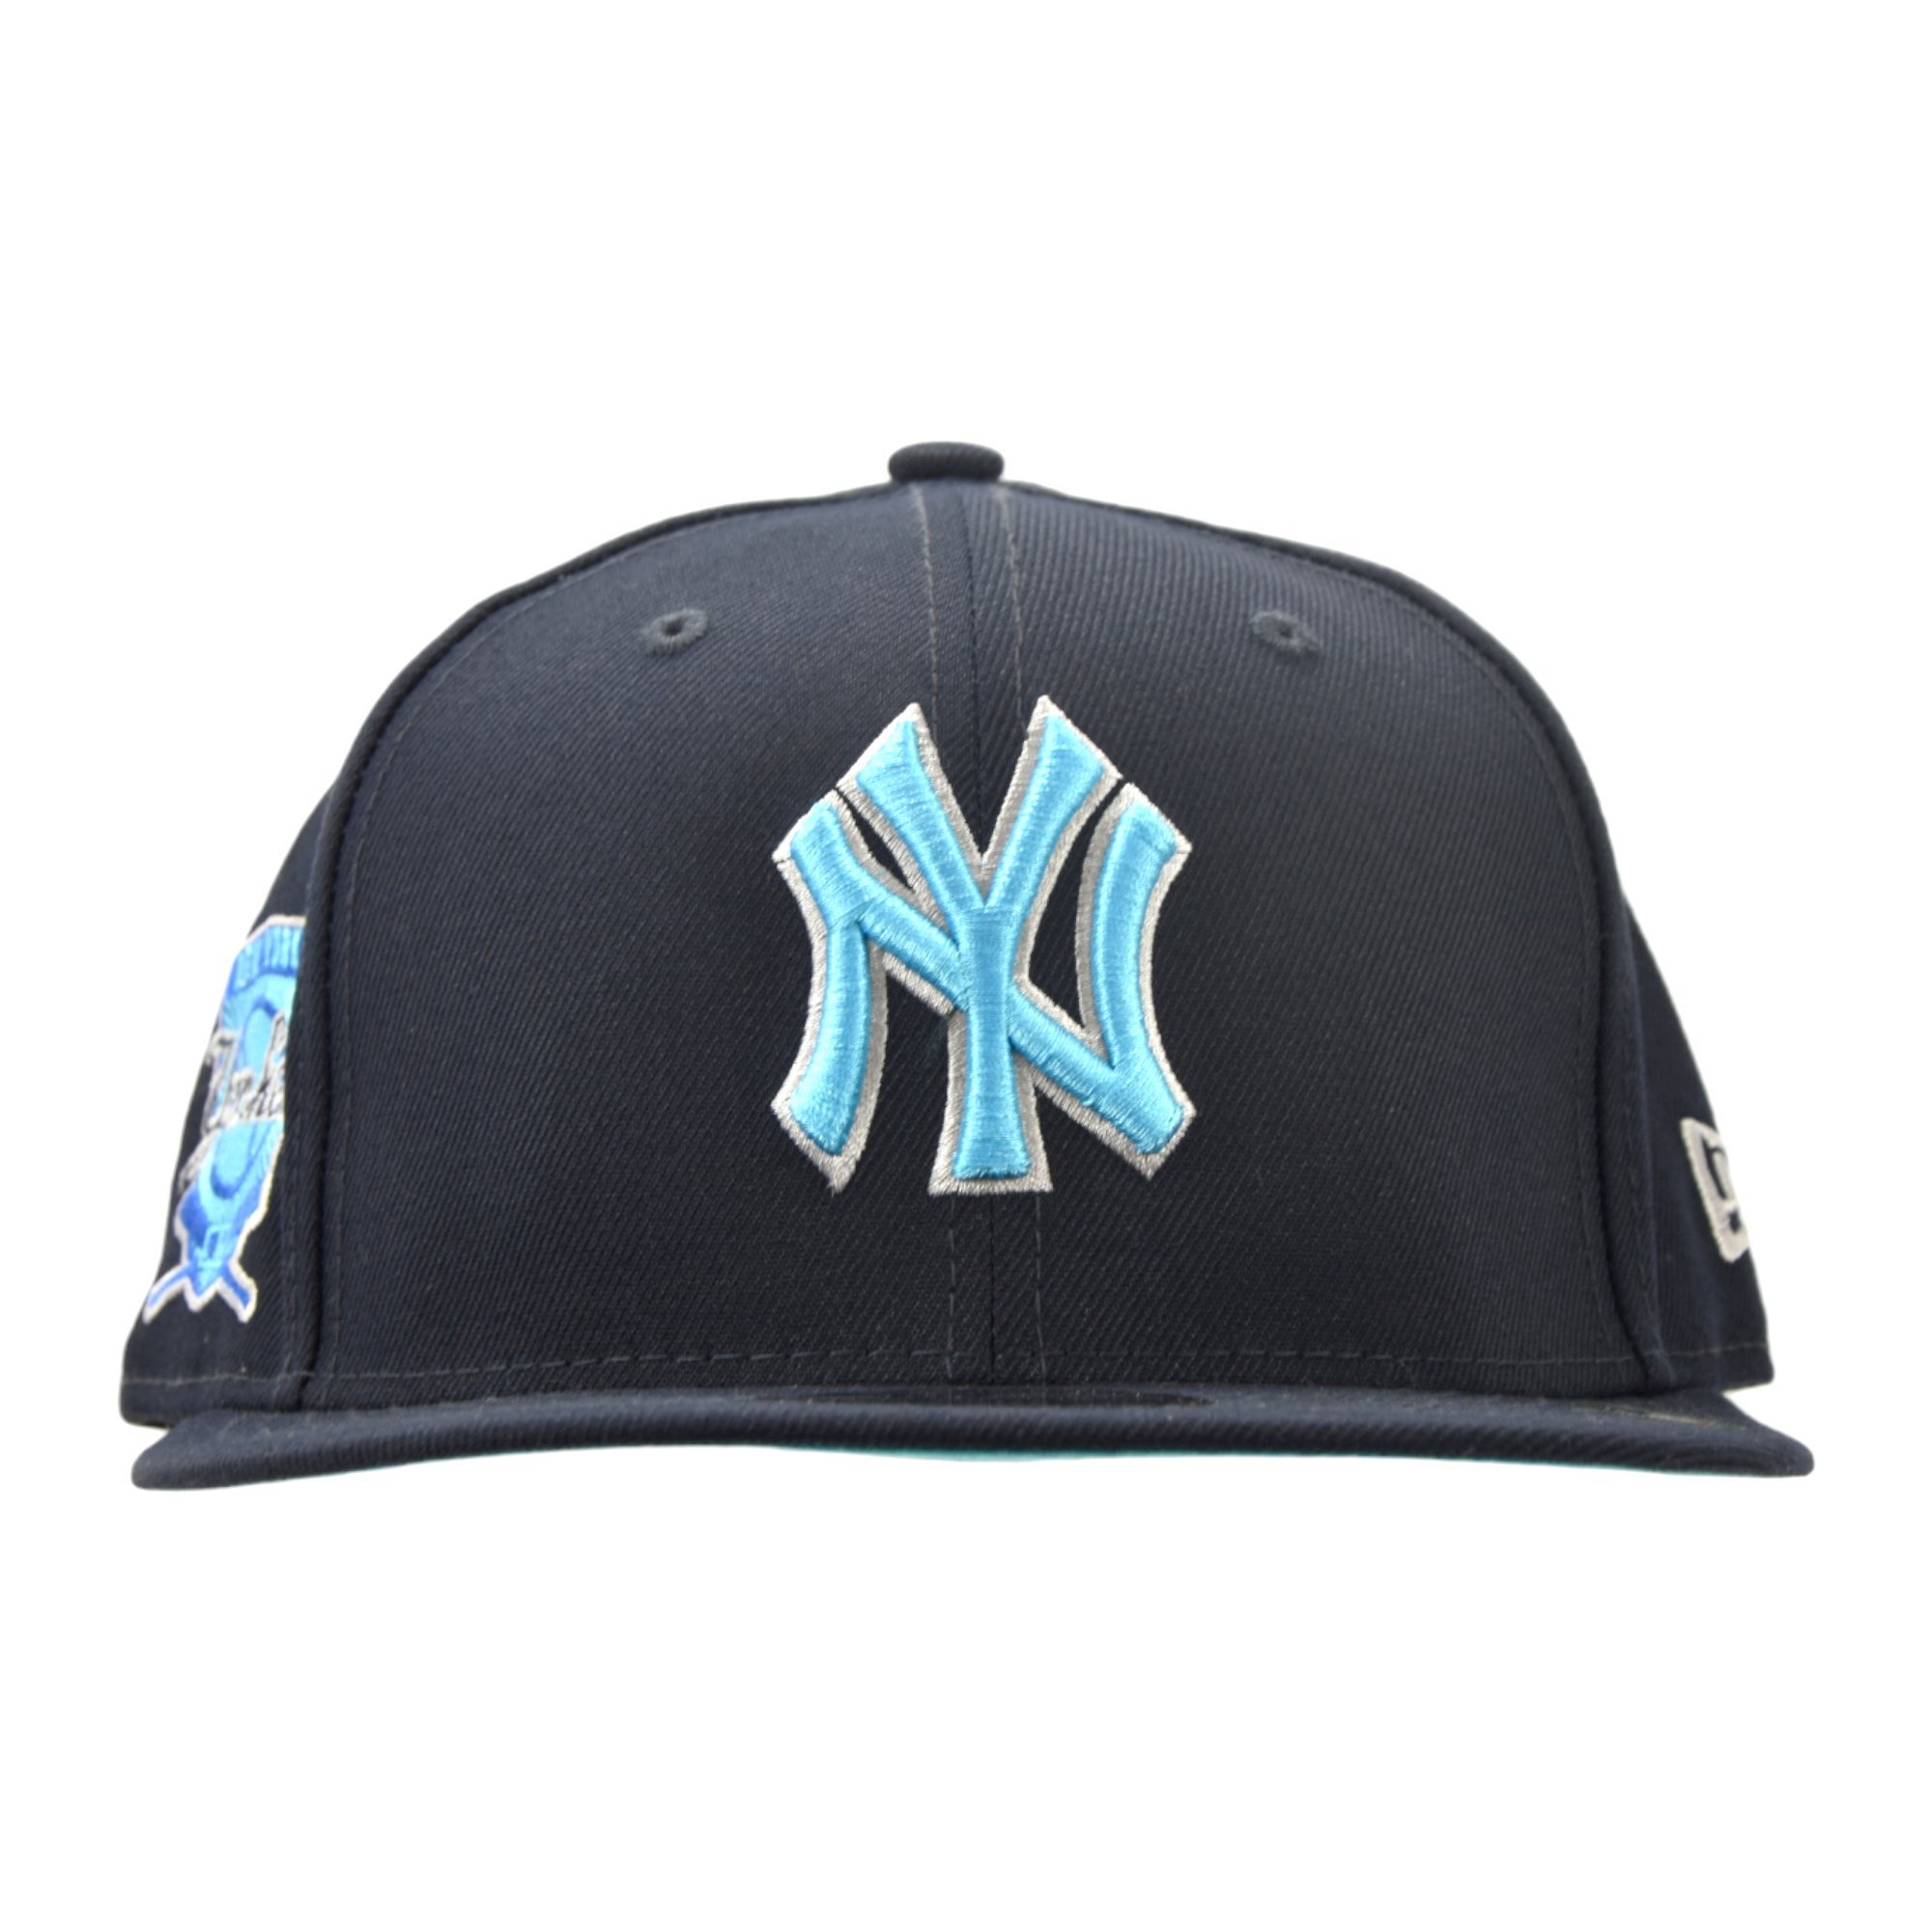 Gorra New Era New York Yankees Gris